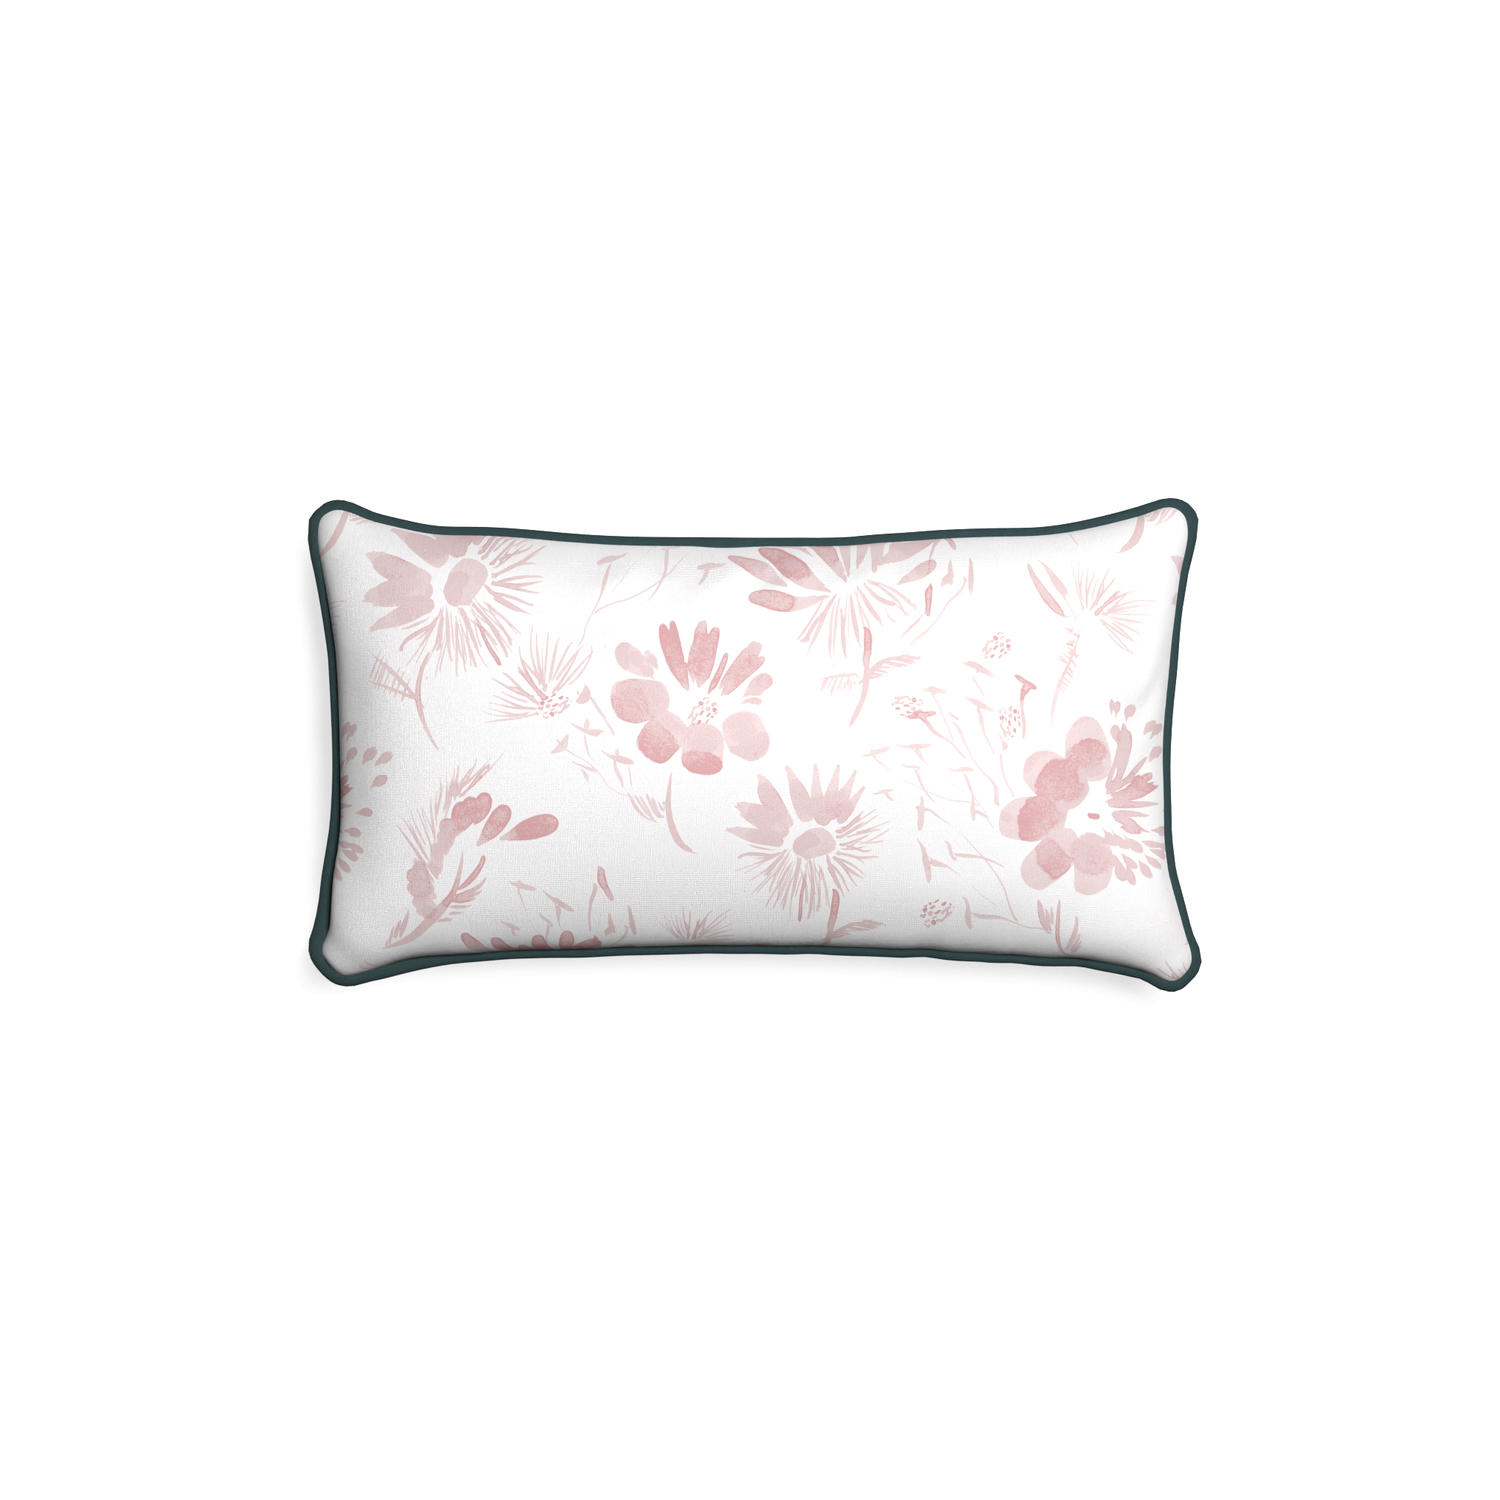 Petite-lumbar blake custom pink floralpillow with p piping on white background